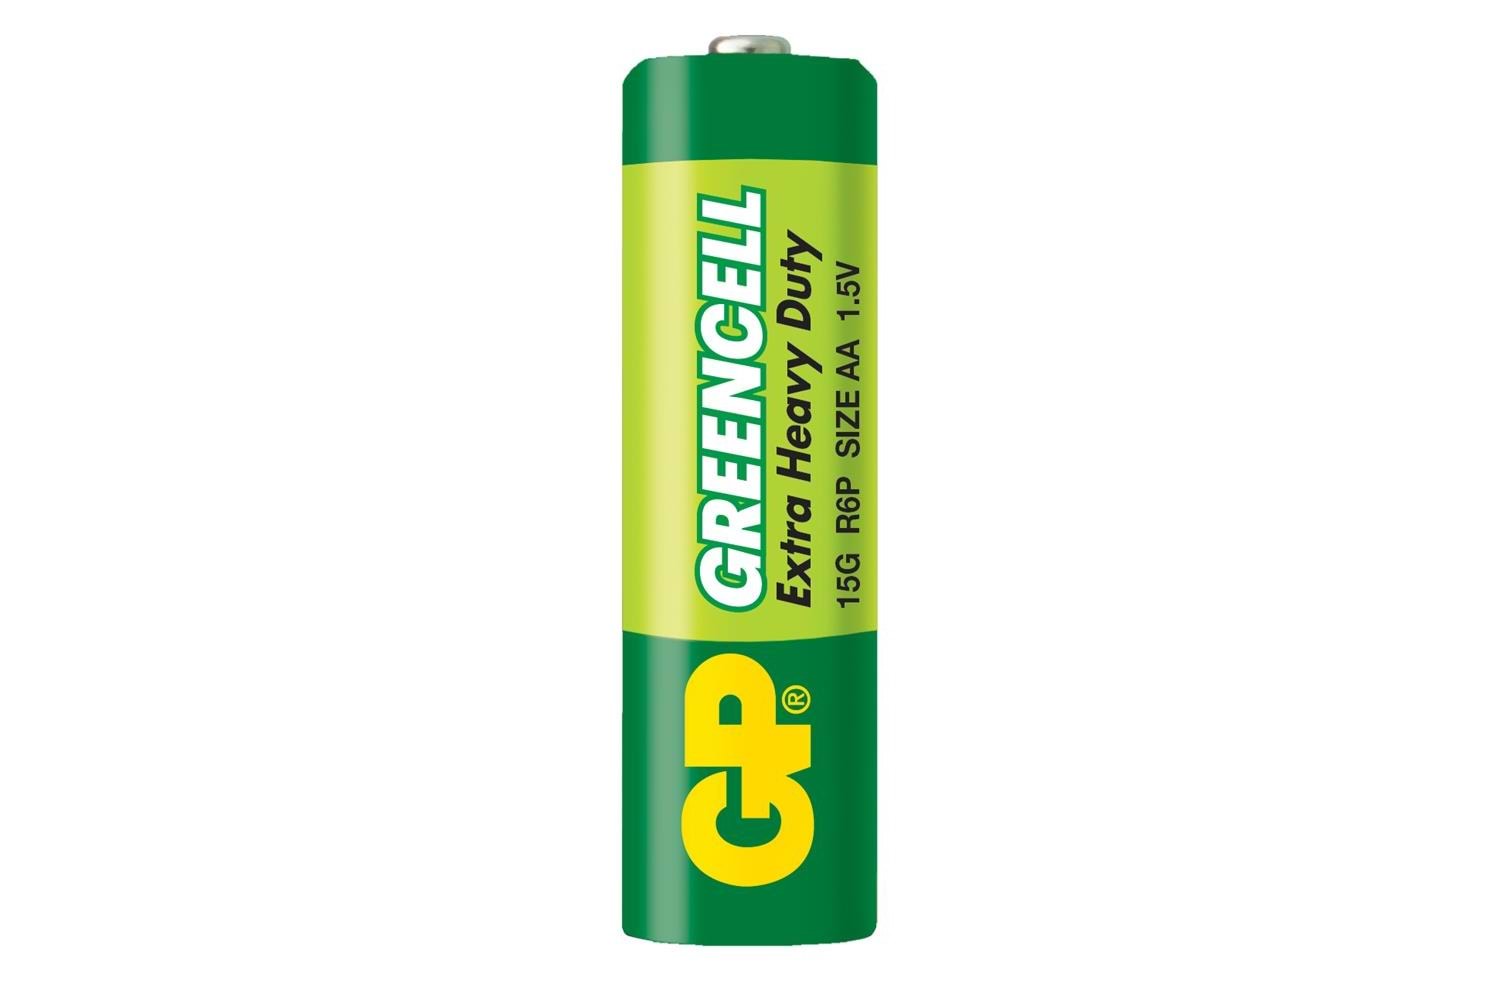 GP Greencel R6 AA Boy Çinko Kalem Pil 4'lü Paket GP15G-U4